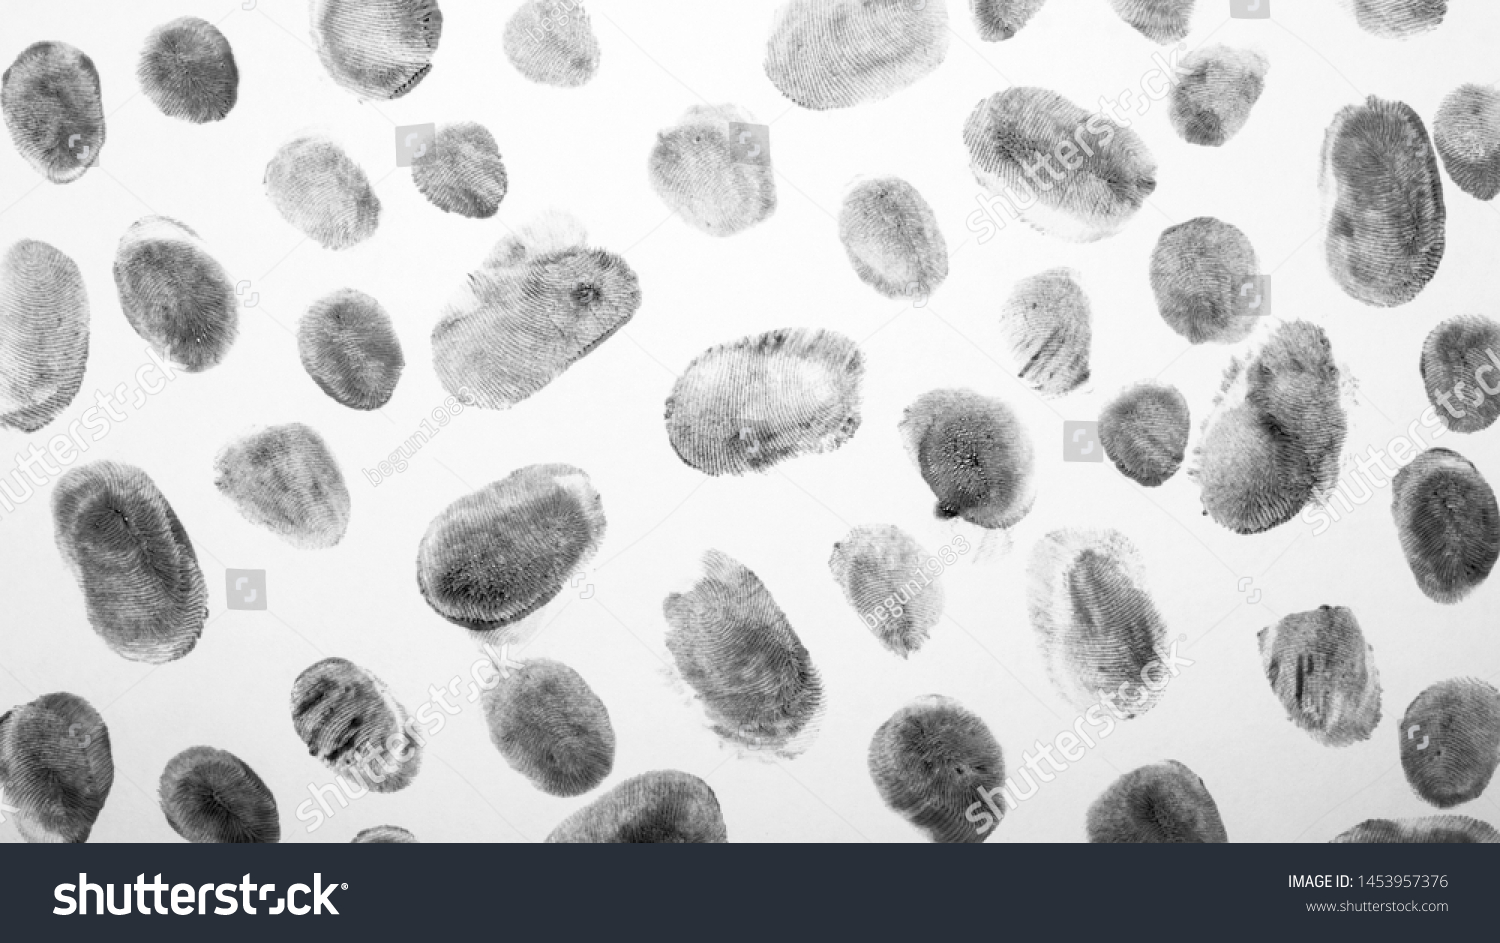 Fingerprints.Background with fingerprints.Black fingerprint on white background. #1453957376